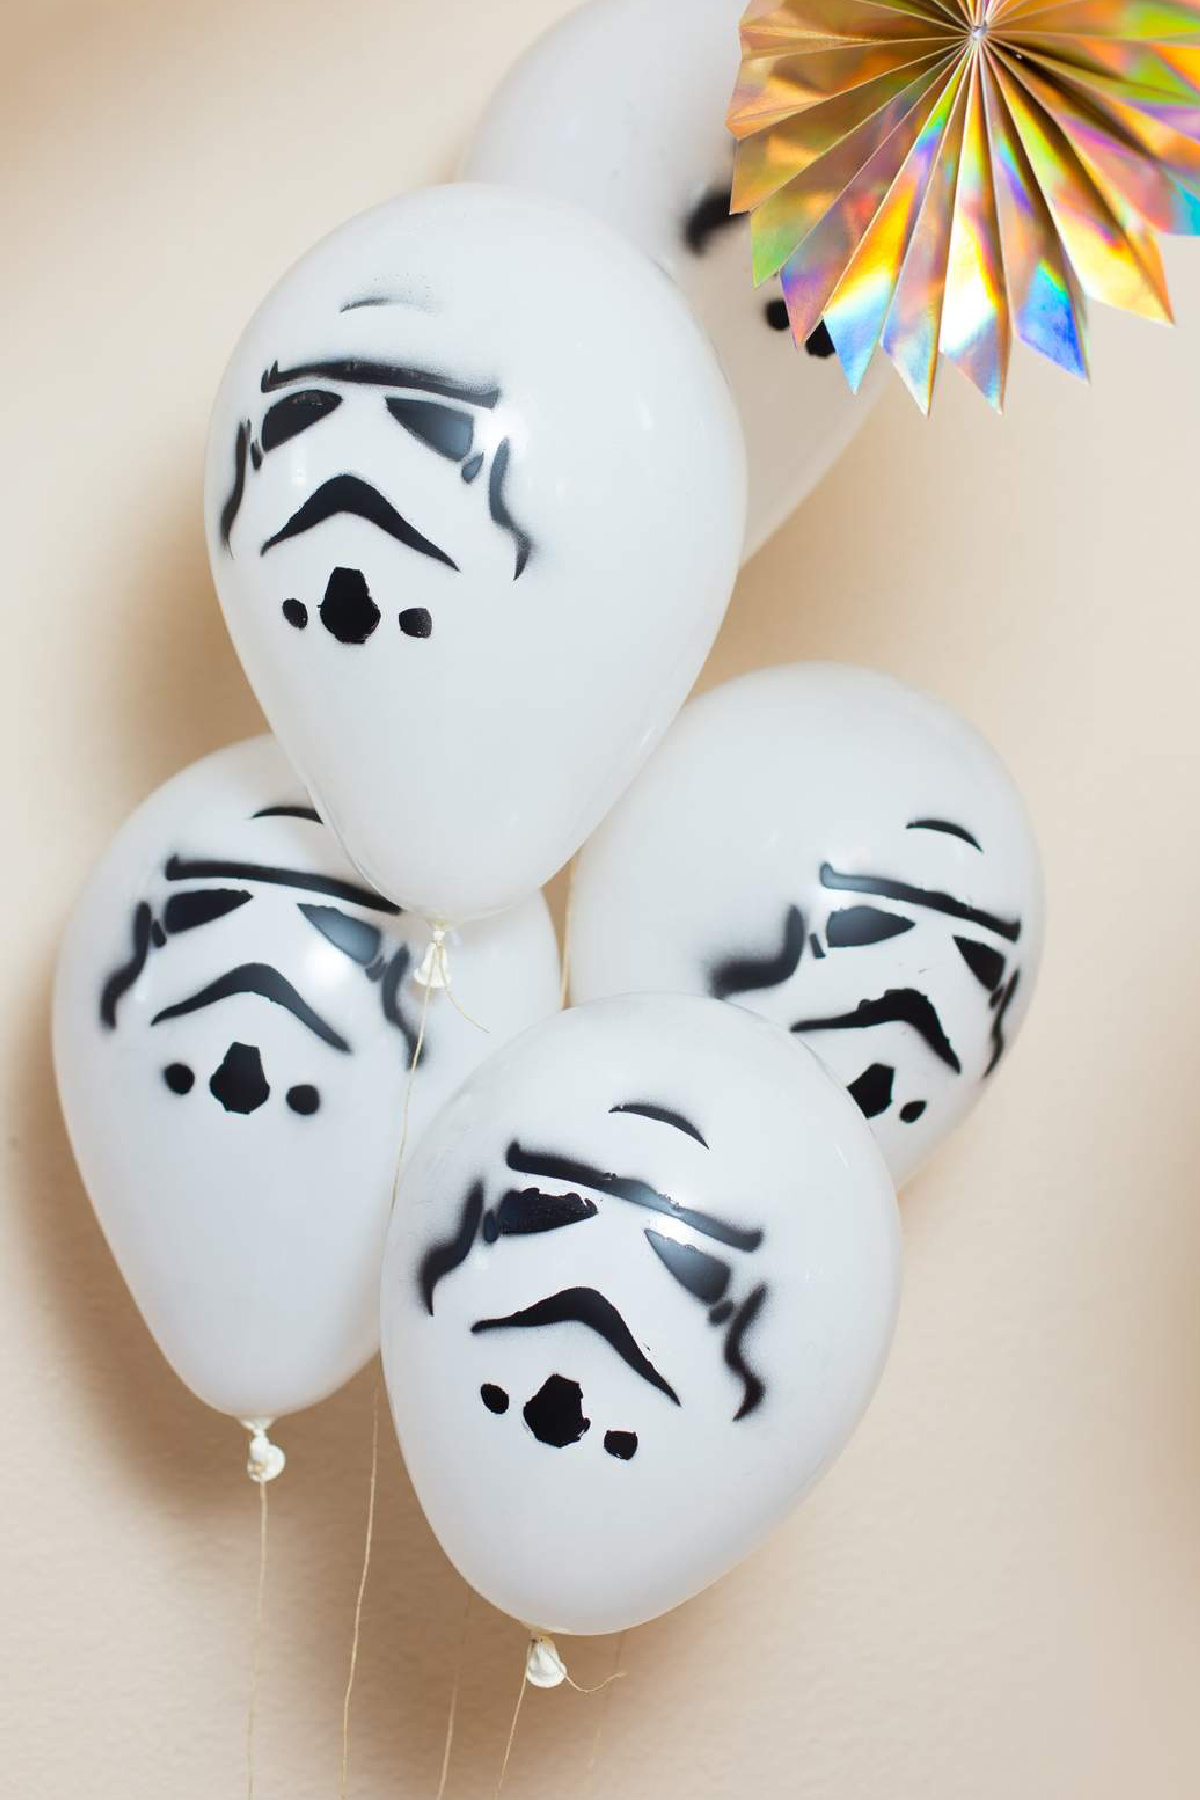 Star Wars Balloons 